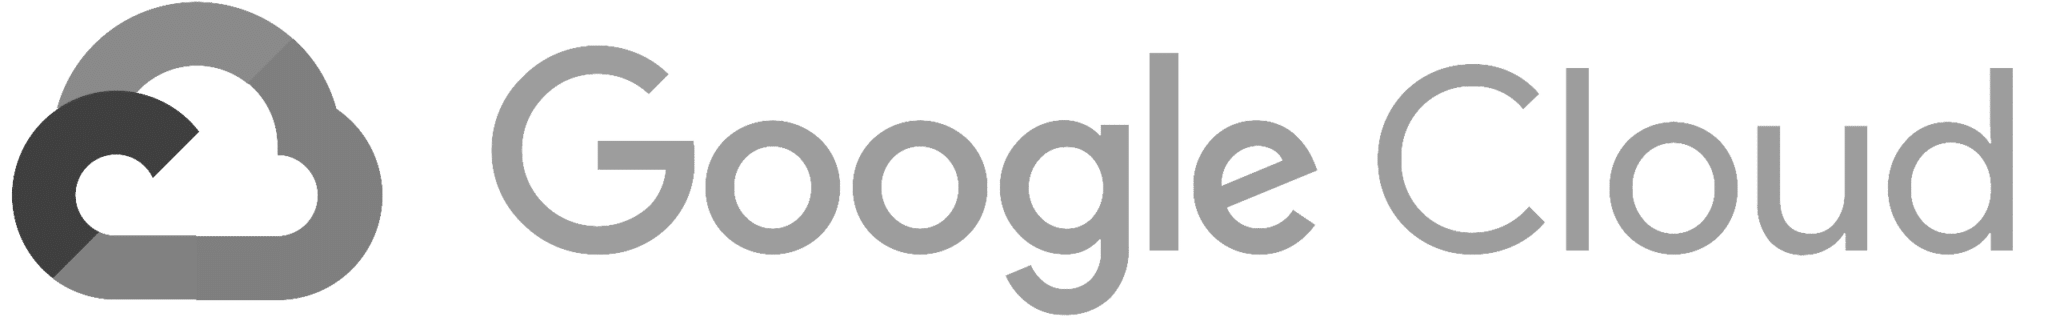 Google_Cloud_logo-grey